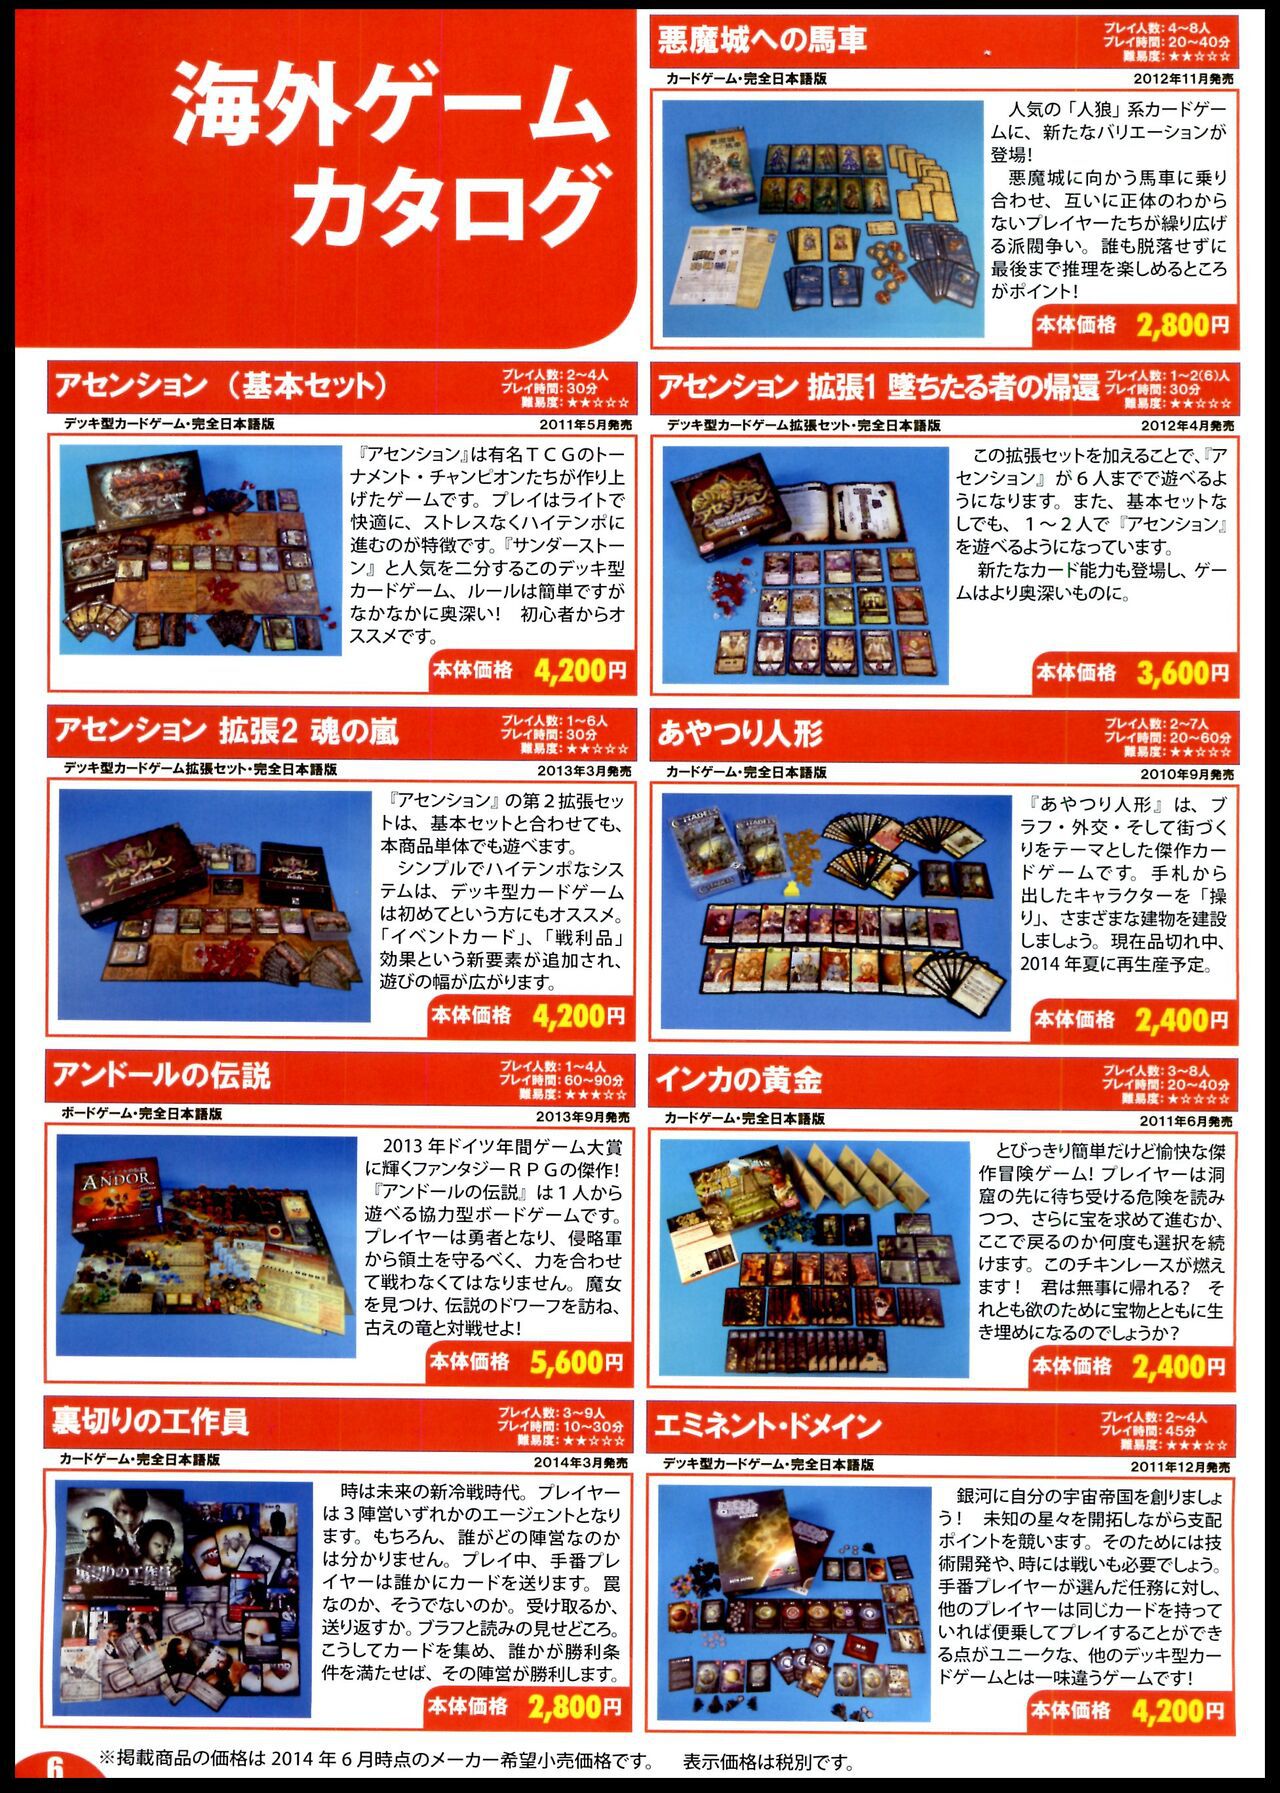 [Arclight Games] Board game catalog 2014 Summer - Autumn [アークライト] ボードゲームカタログ 2014 夏-秋 6